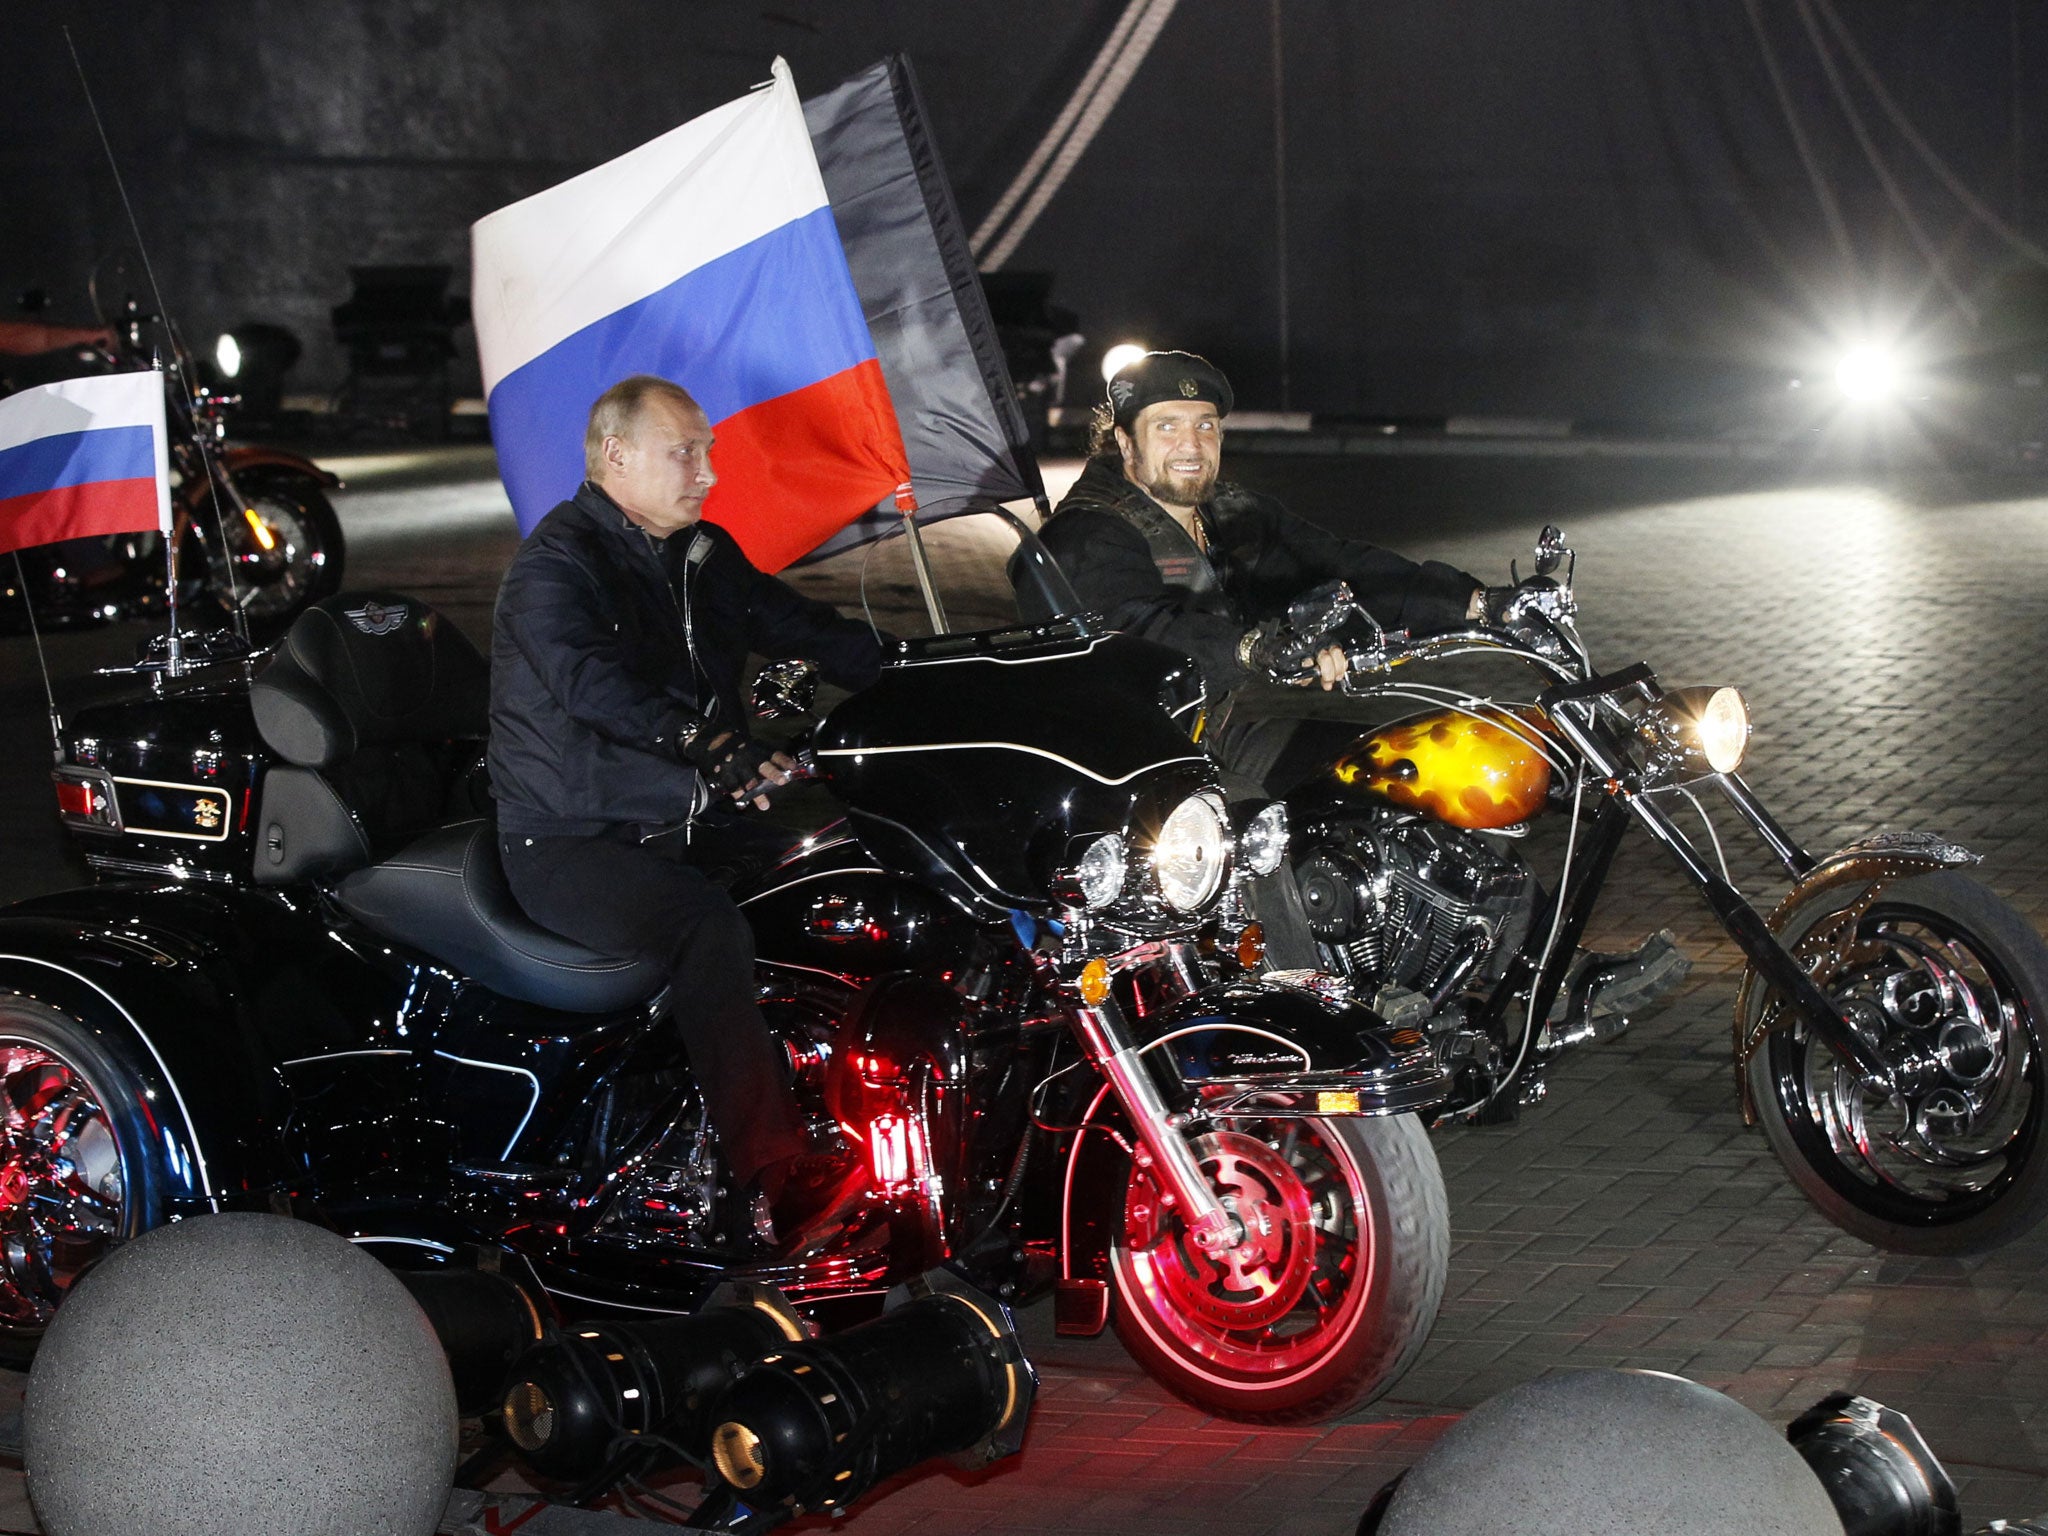 Vladimir Putin rides with the Night Wolves biker gang in the port of Novorossiysk in 2011